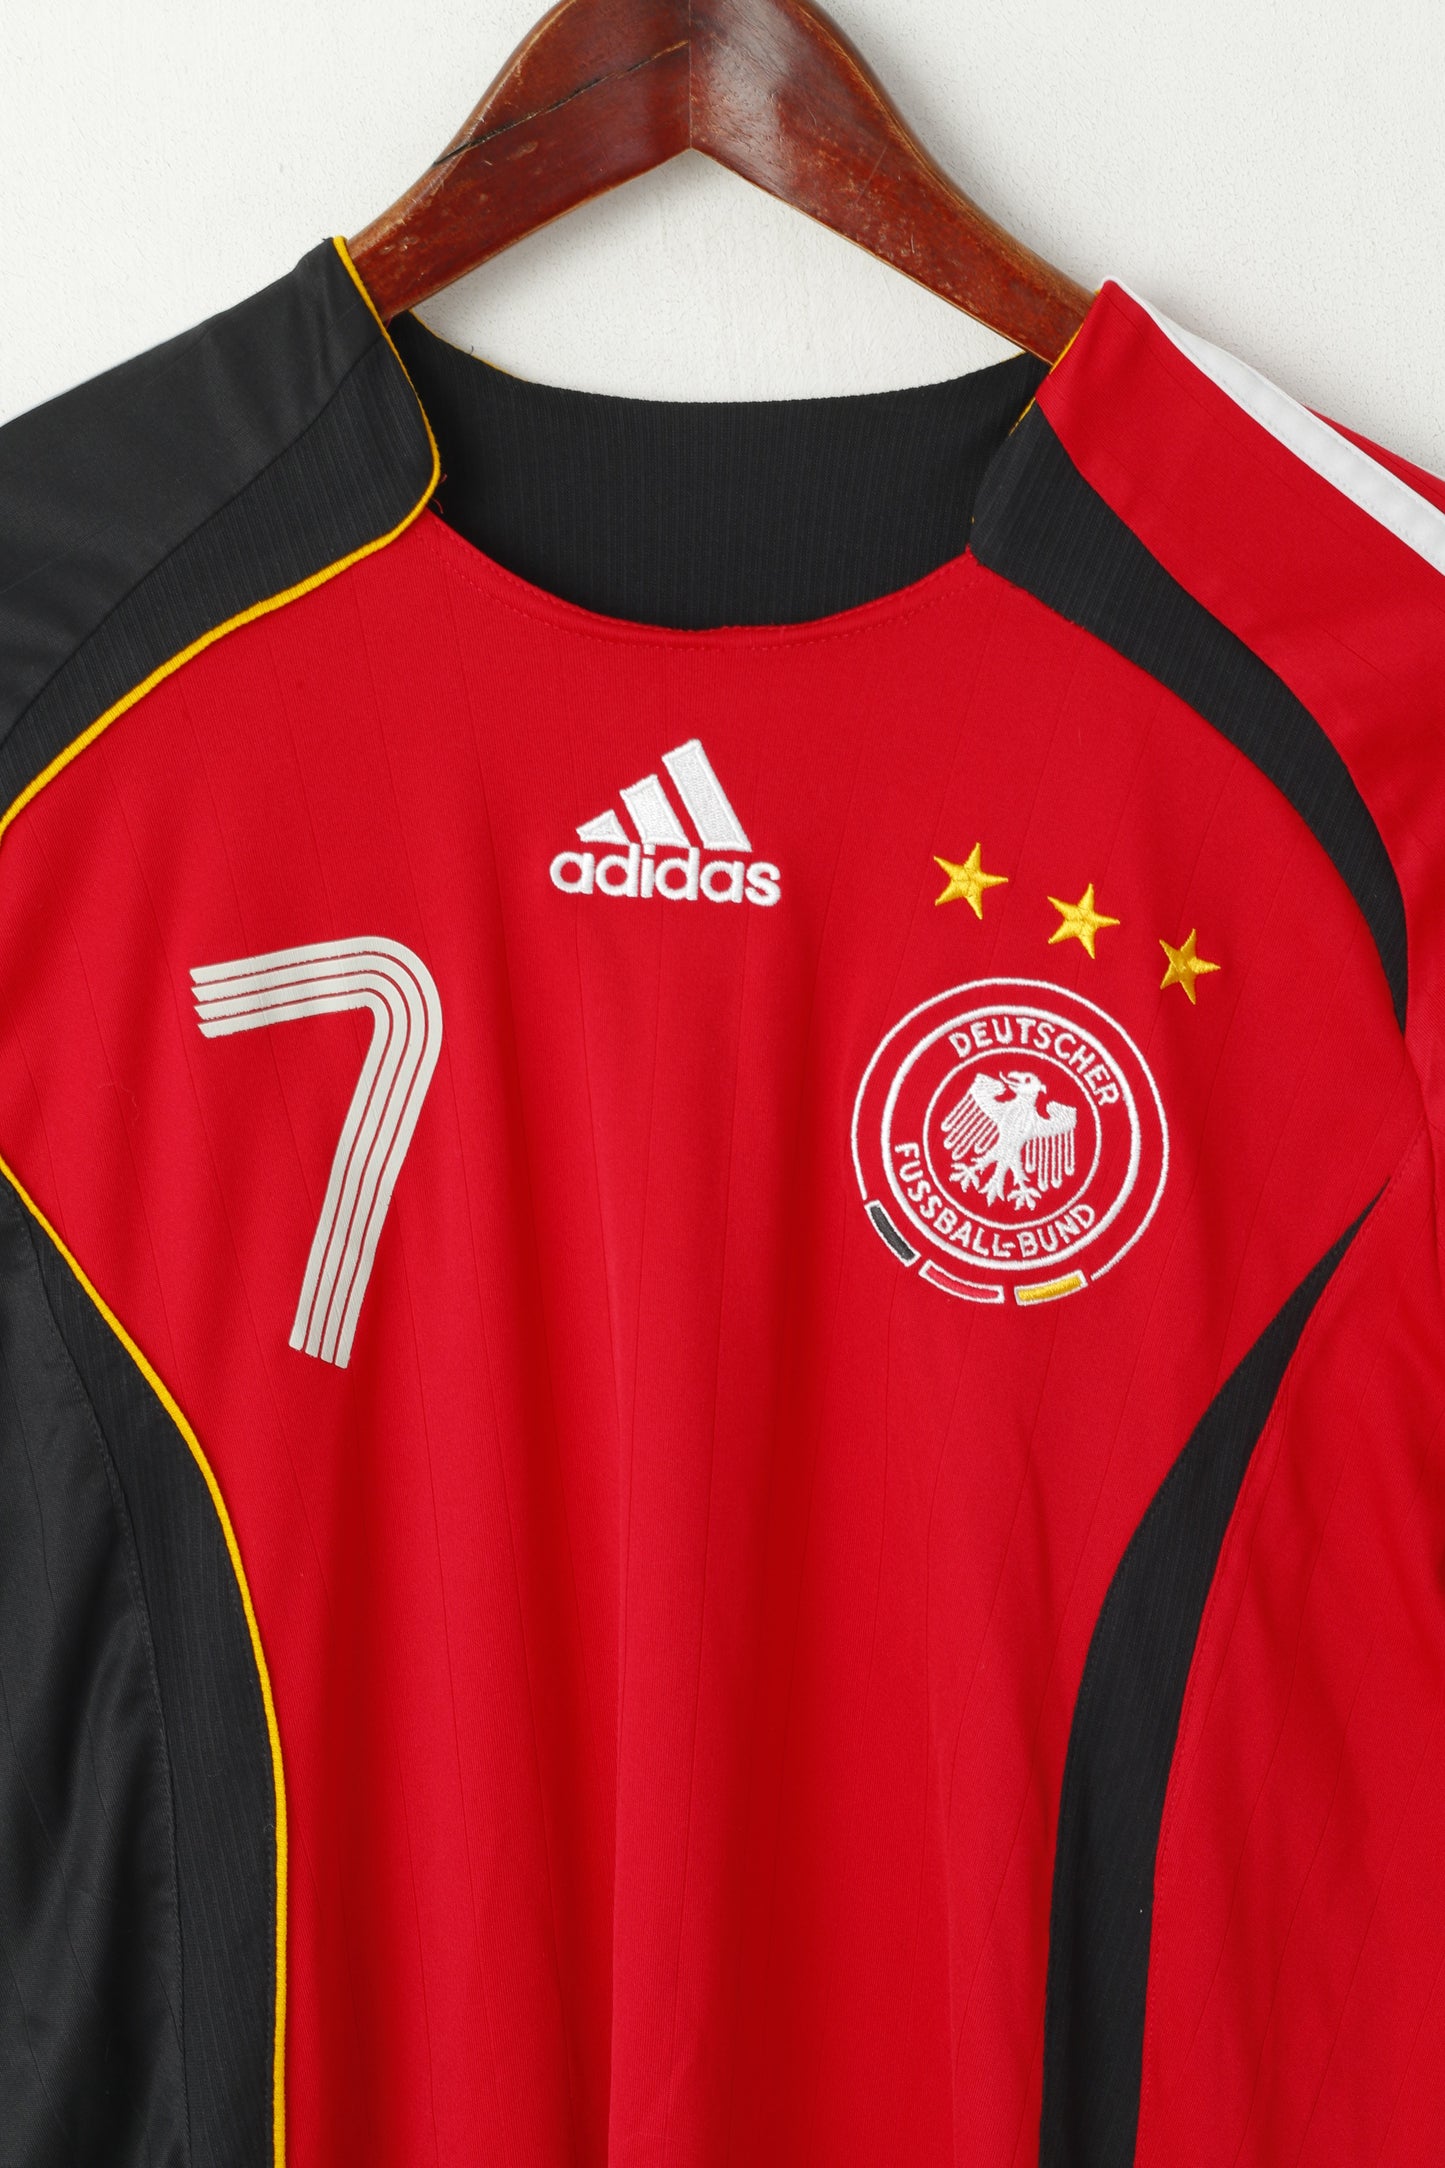 Adidas Men S Shirt Red Deutche Football #7 Schweinsteiger Jersey Vintage Top